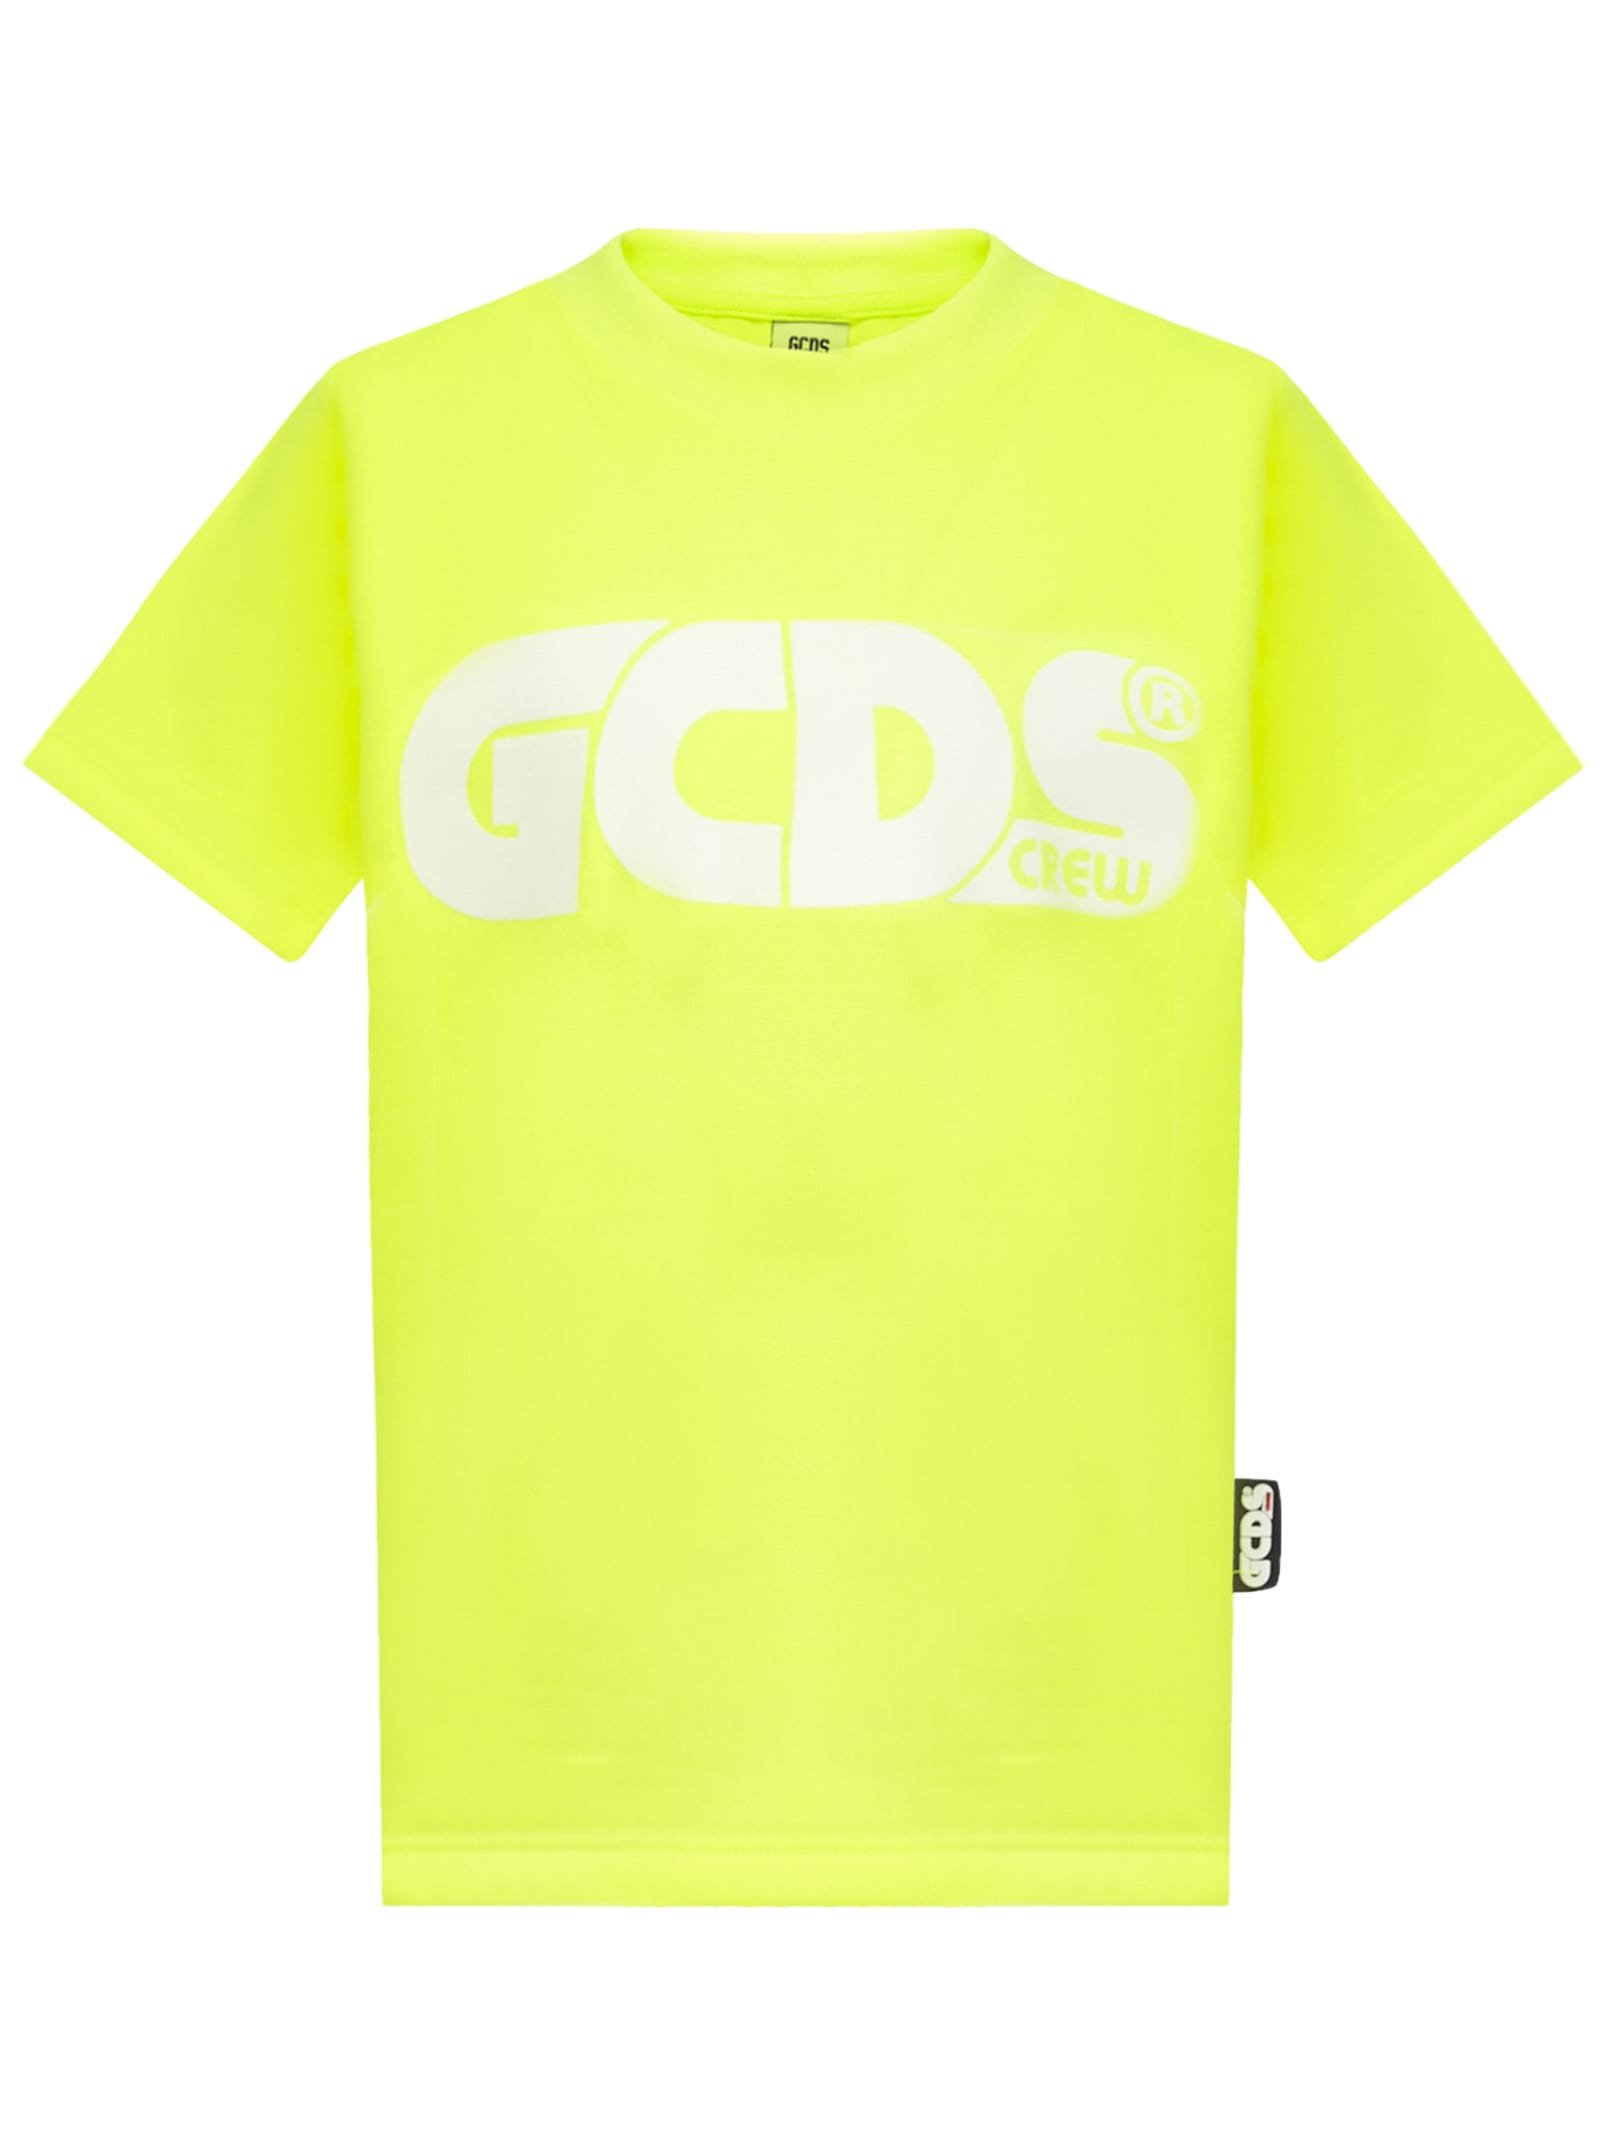 Gcds Mini Fluo Yellow Teen T-shirt In Giallo Fluo